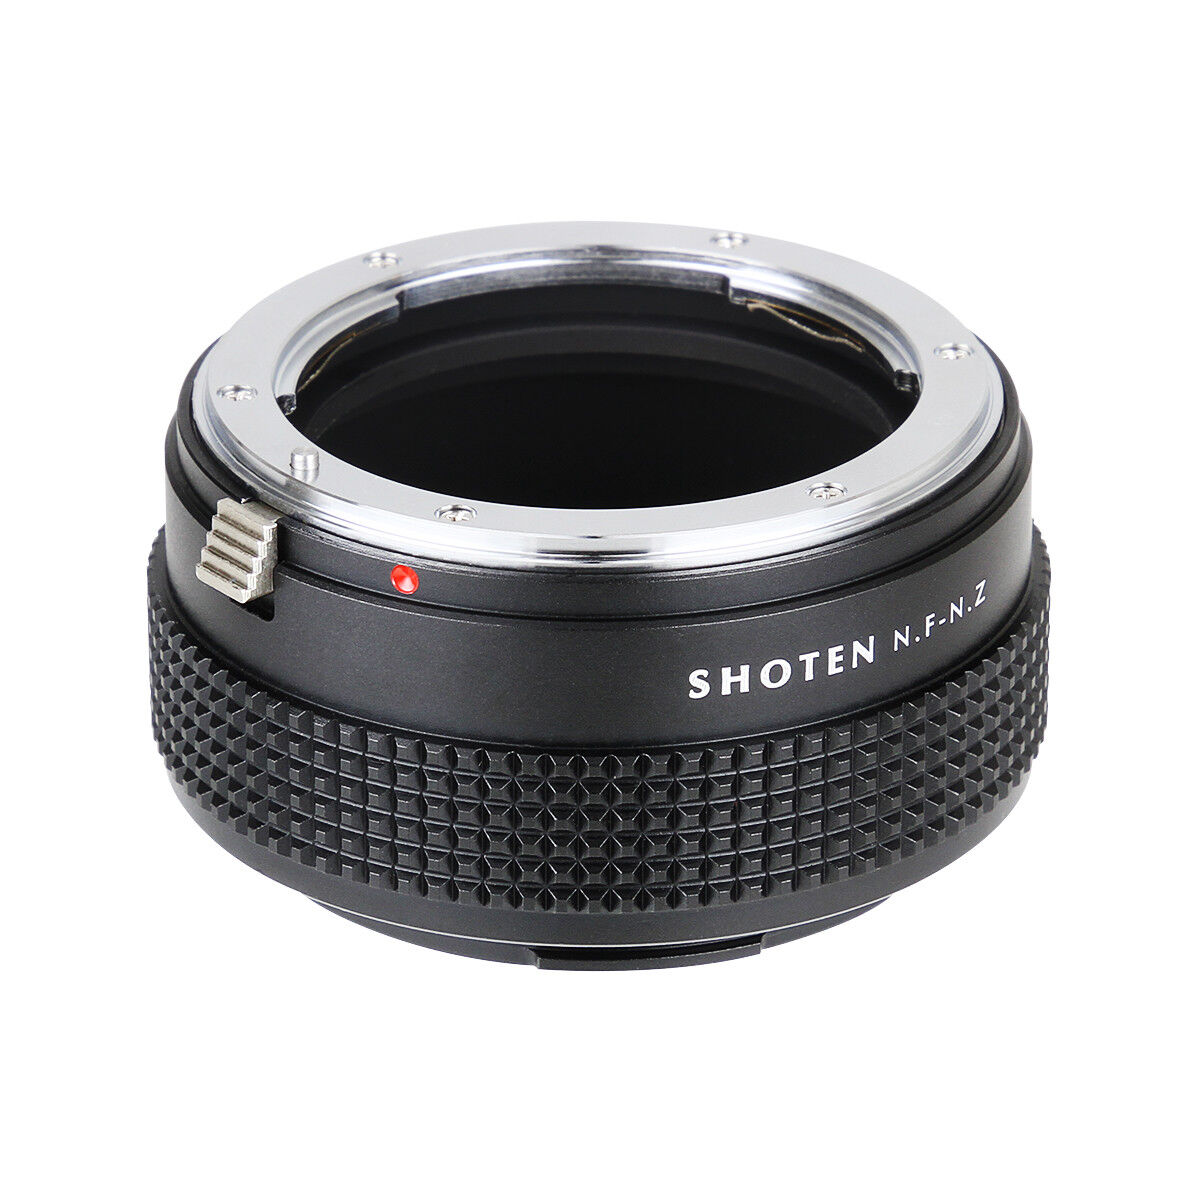 SHOTEN adapter for NIKON AUTO AIS AI F mount lens to Nikon Z mount Z6 Z7 camera SHOTEN Does Not Apply - фотография #2